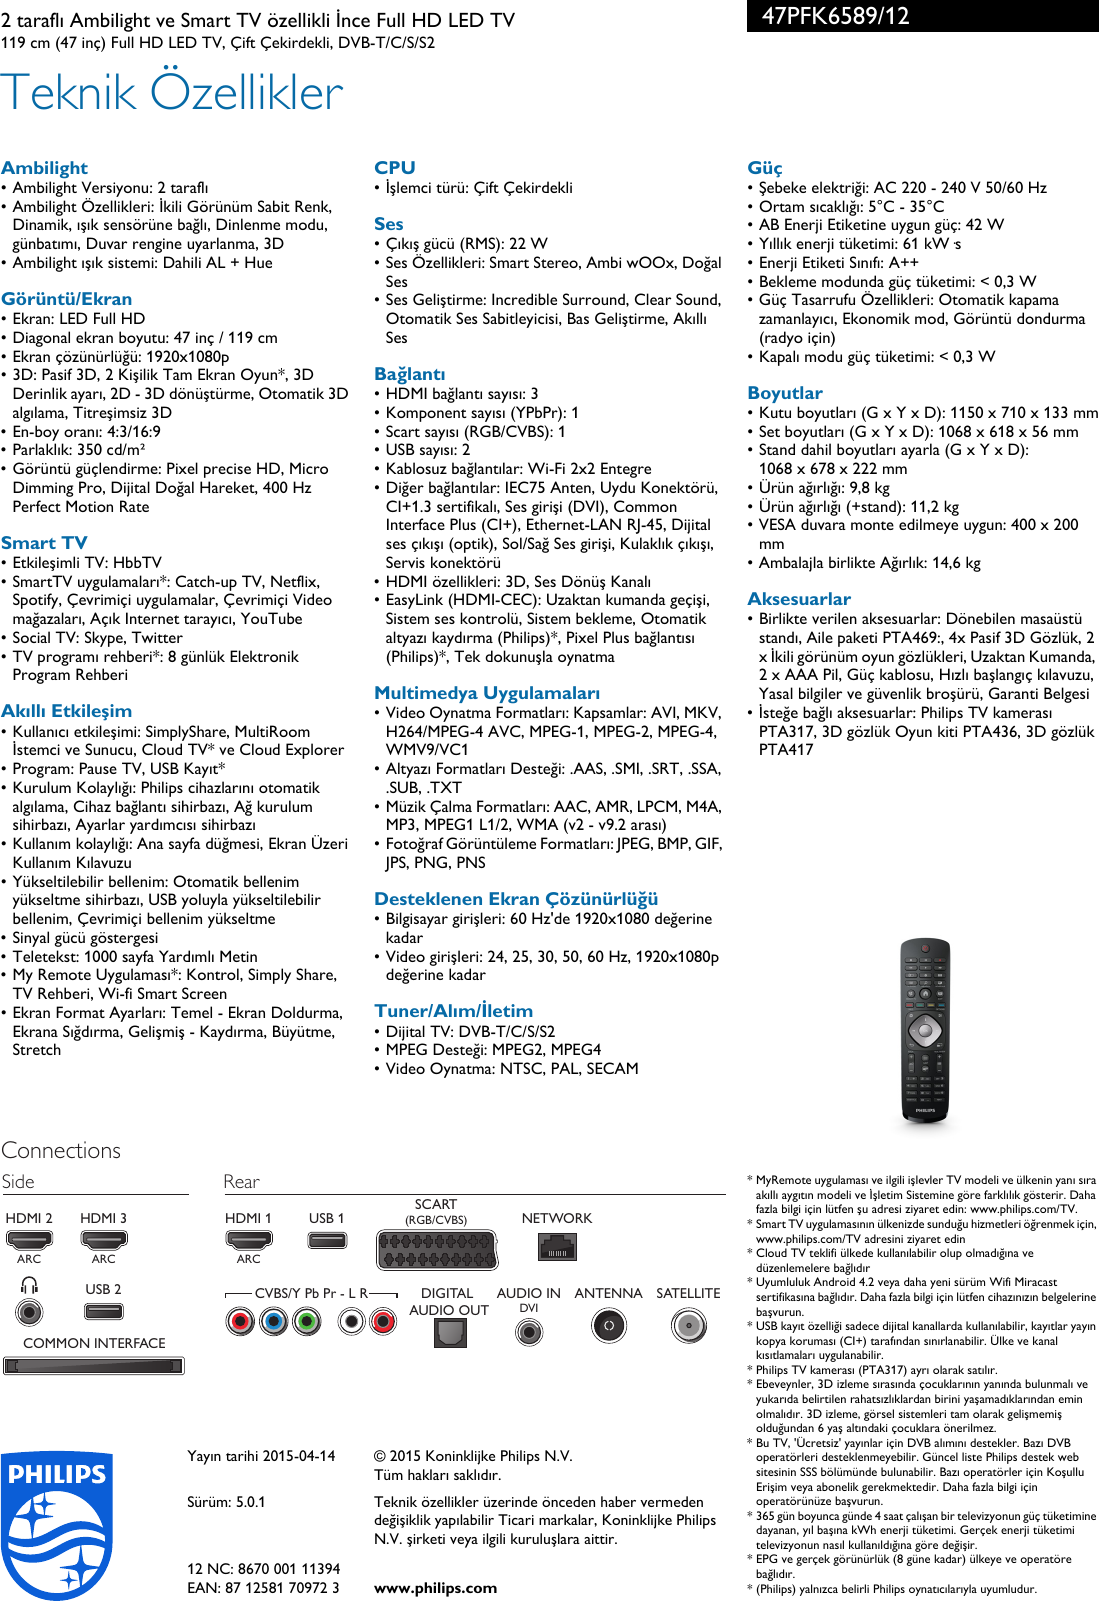 Page 3 of 3 - Philips 47PFK6589/12 2 Taraflı Ambilight Ve Smart TV özellikli İnce Full HD LED User Manual Broşür 47pfk6589 12 Pss Turtr